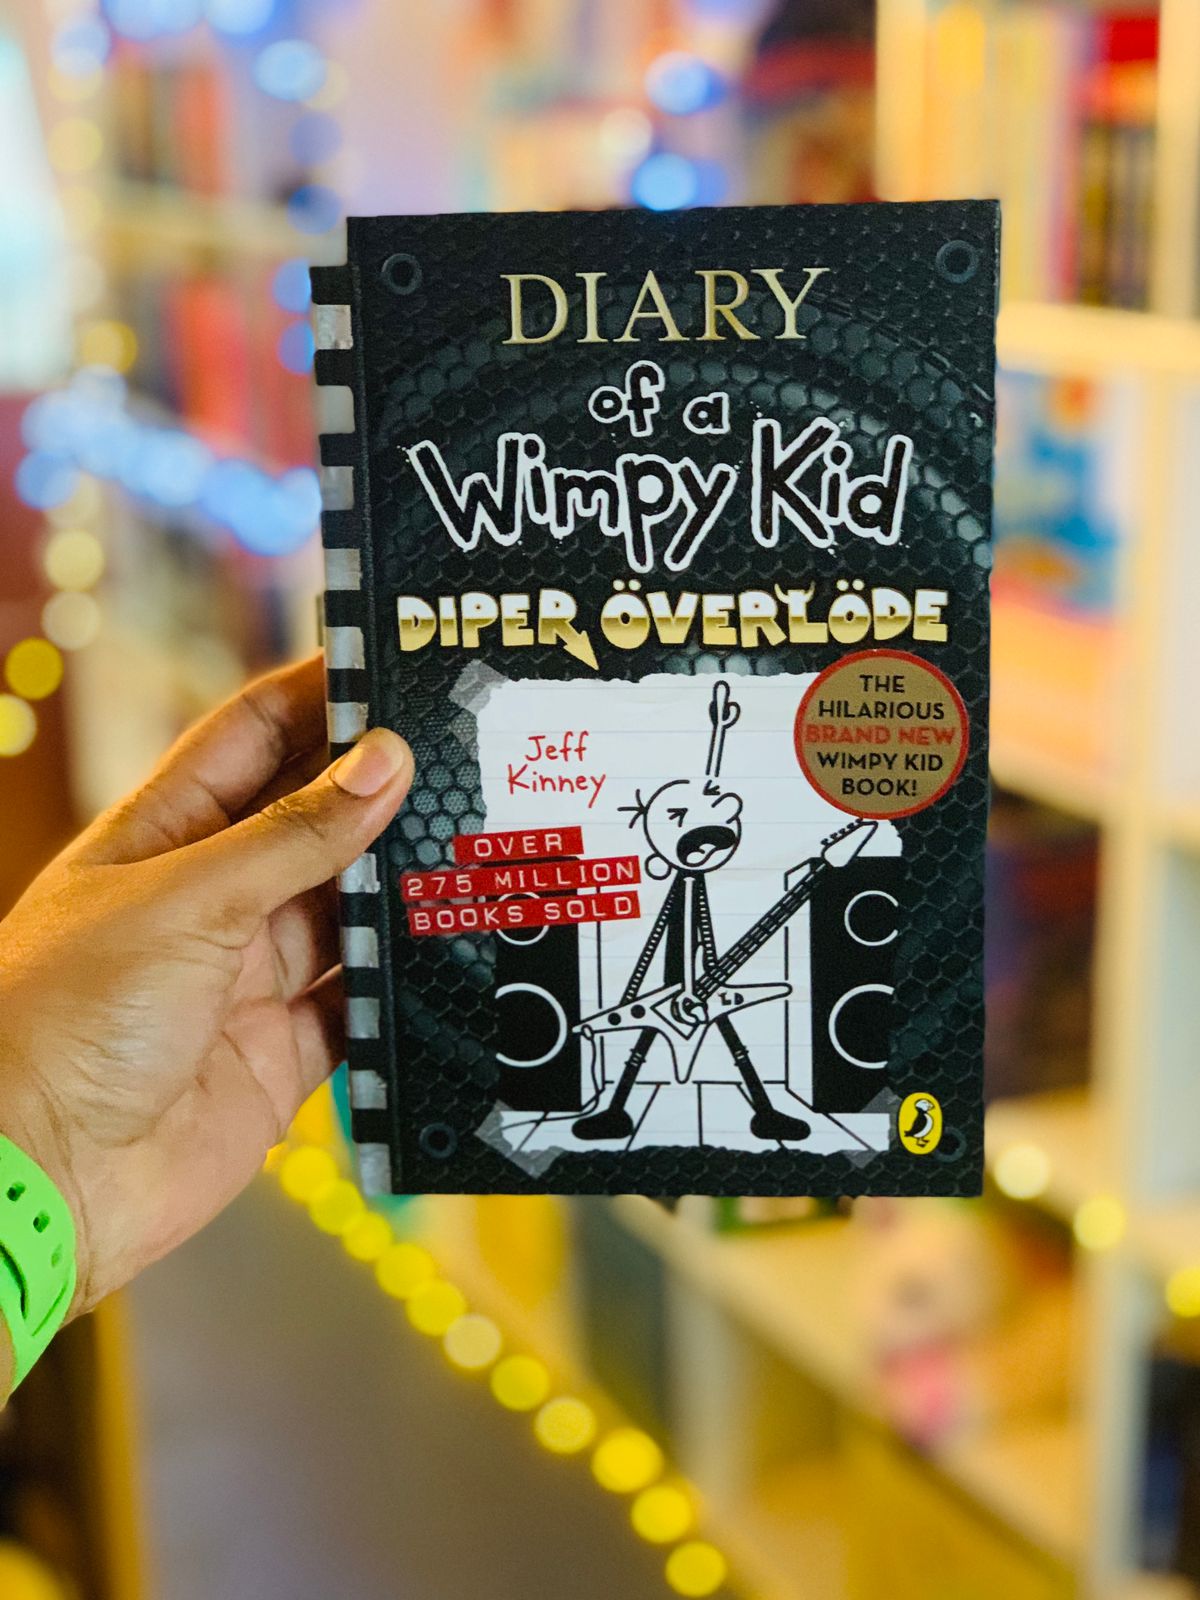 Diper Överlöde (Diary of a Wimpy Kid Book 17) by Jeff Kinney